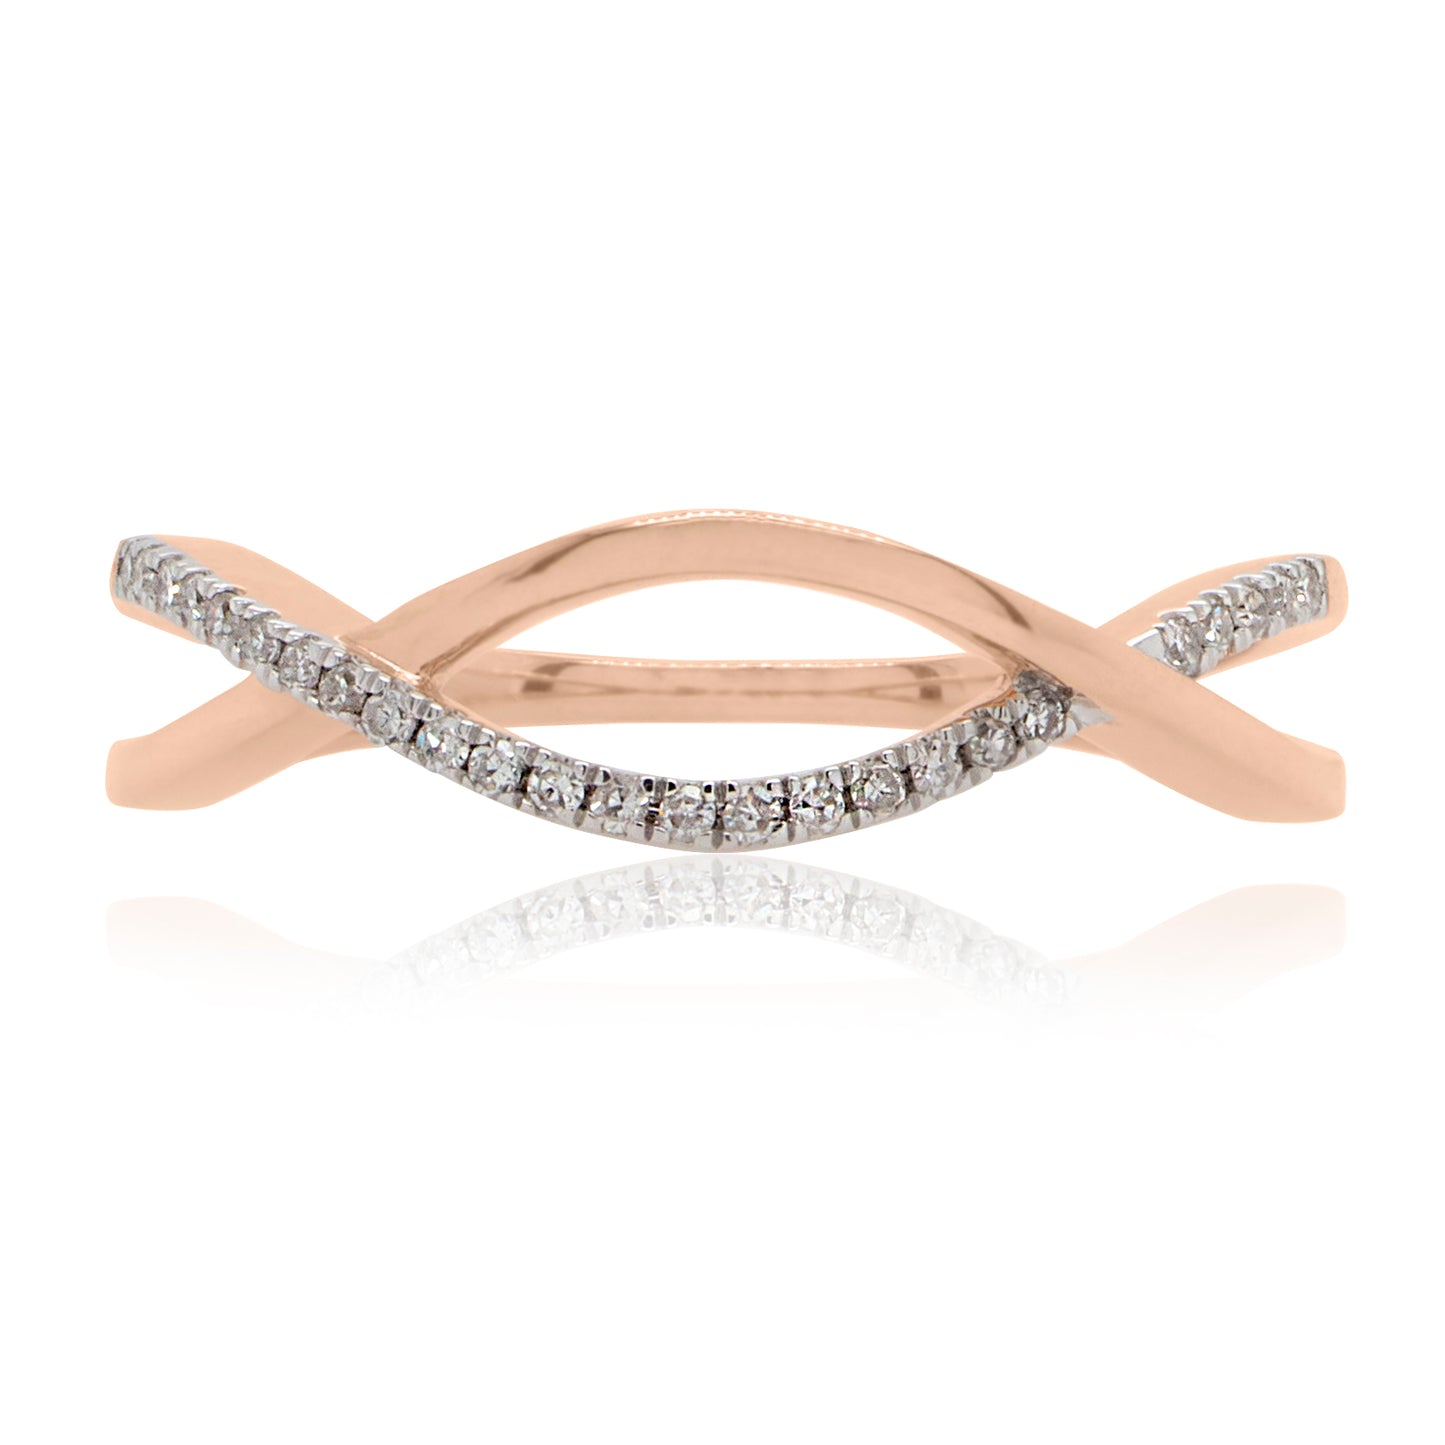 Lady's 14 Karat Rosé Gold Contemporary Diamond Fashion Ring